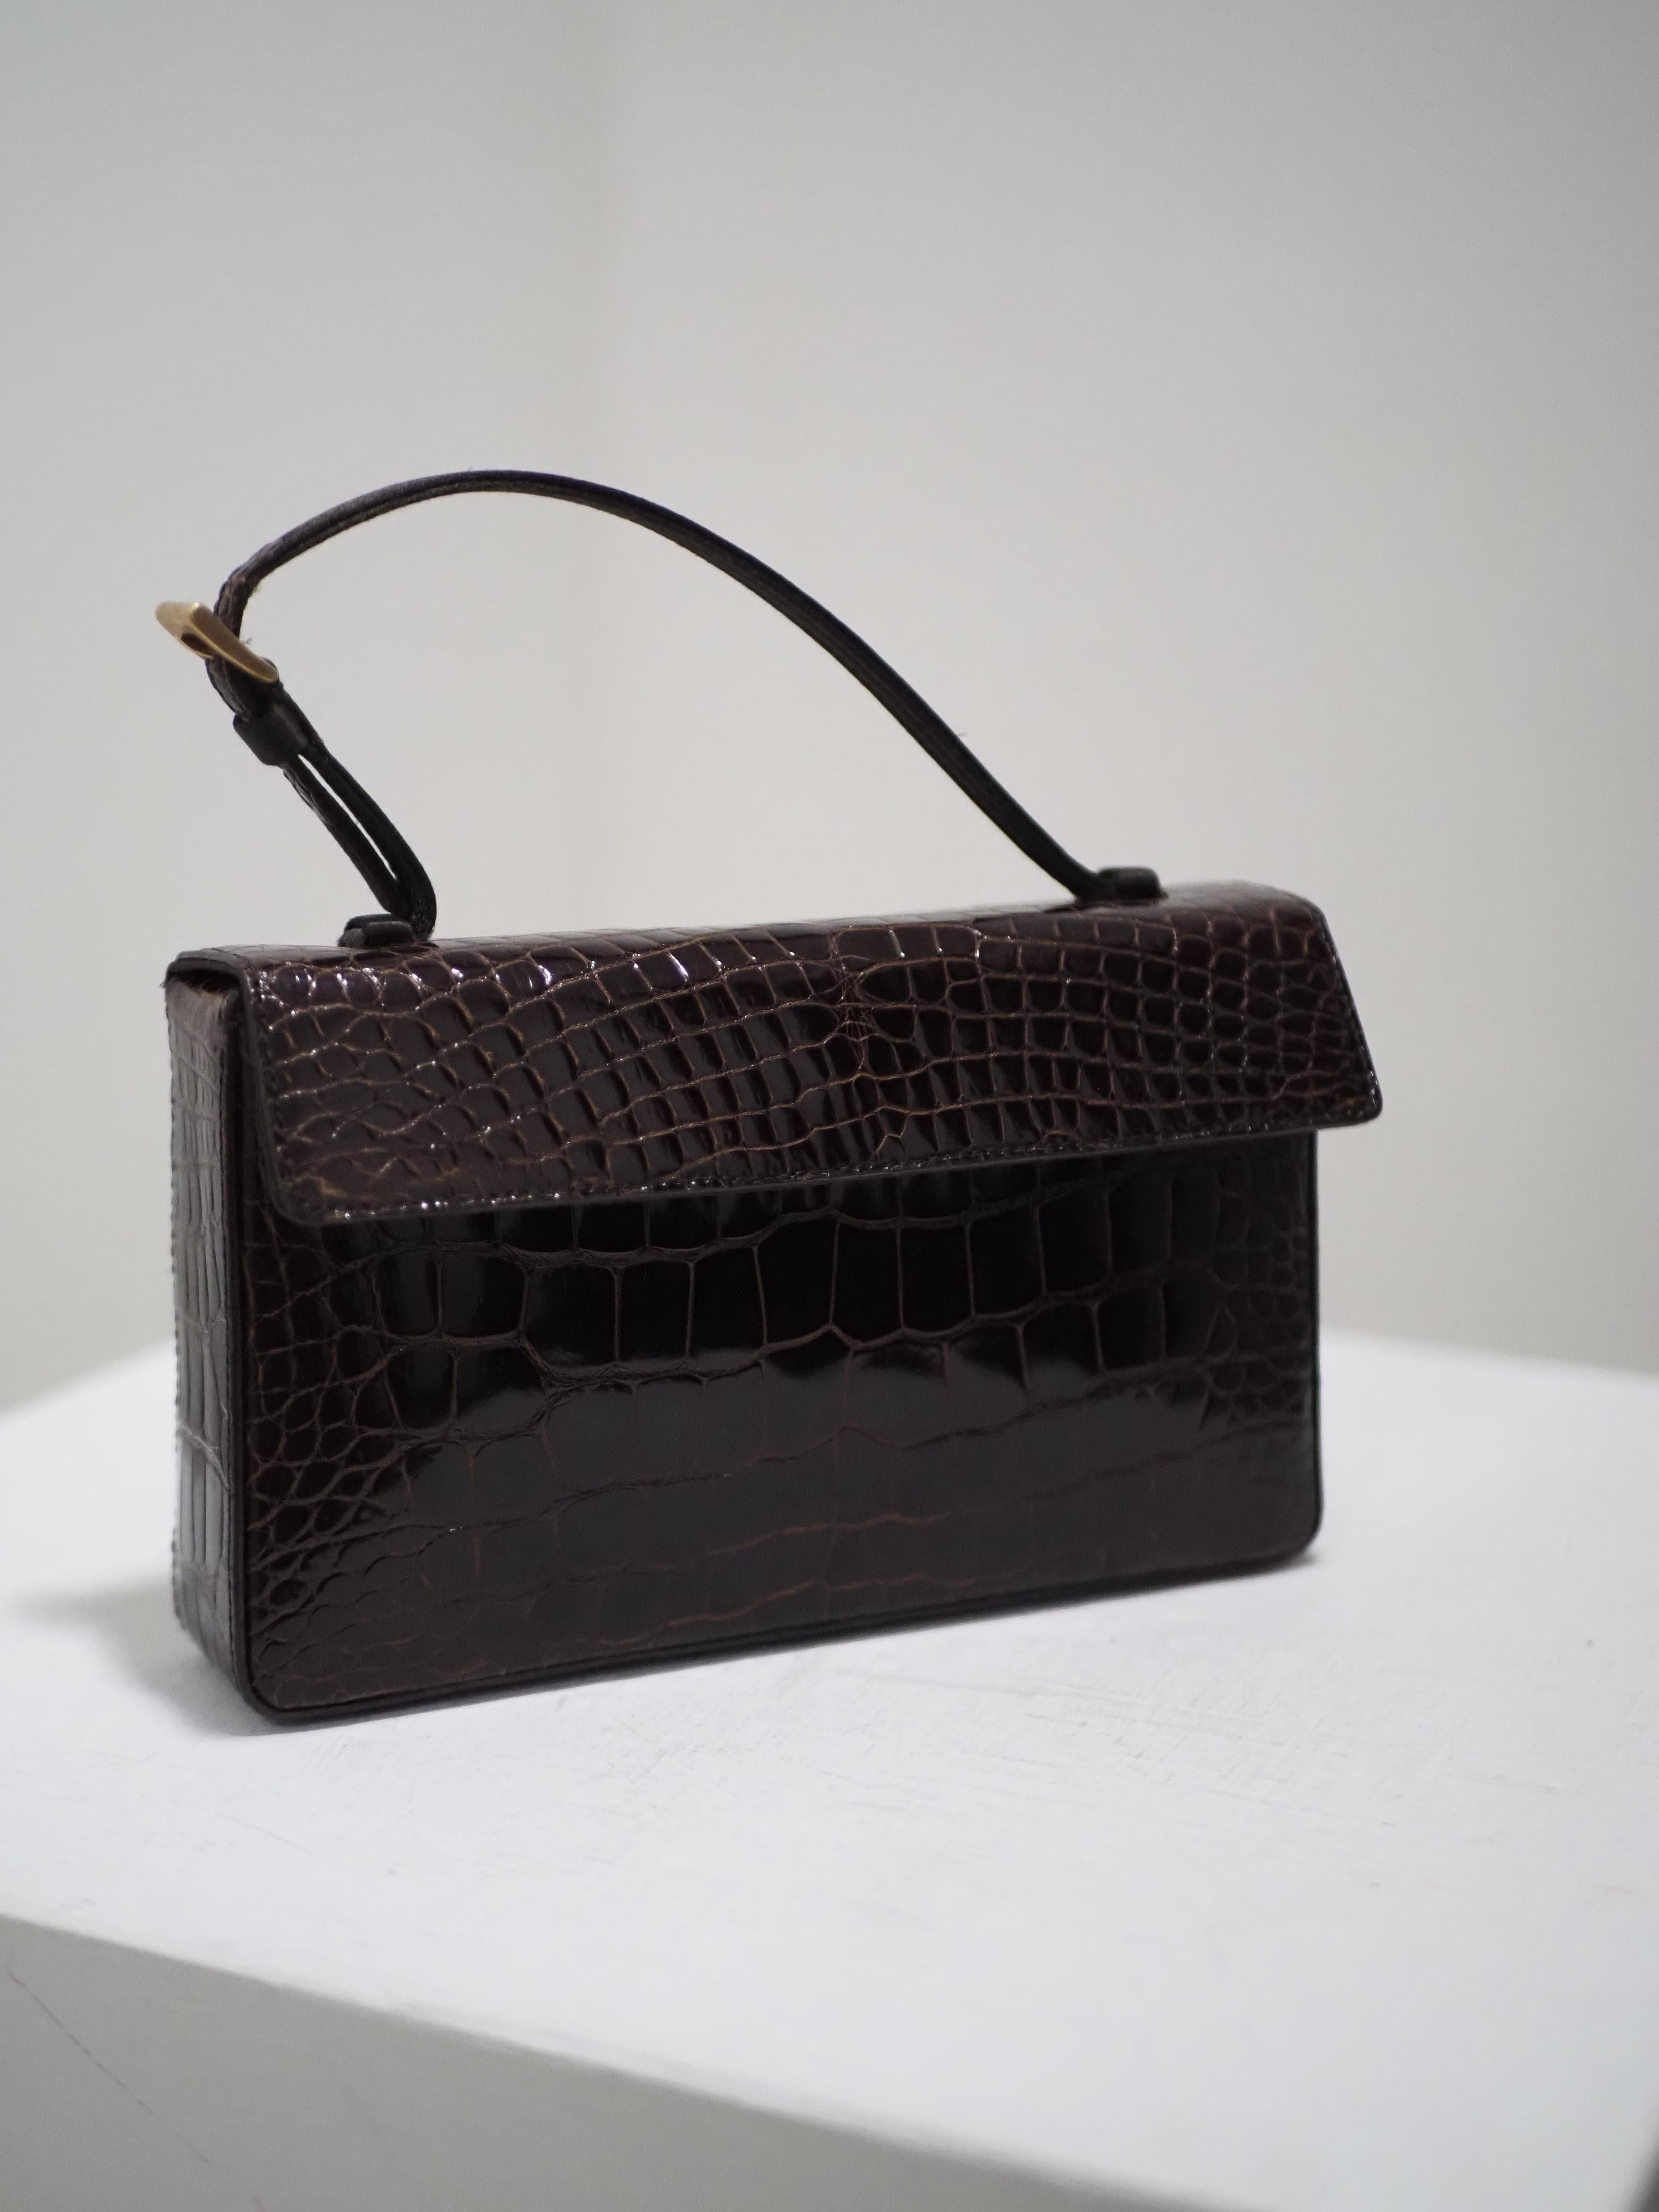 Prada brown croco leather small handbag
totally made in italy
17*9 cm, 3 cm depth